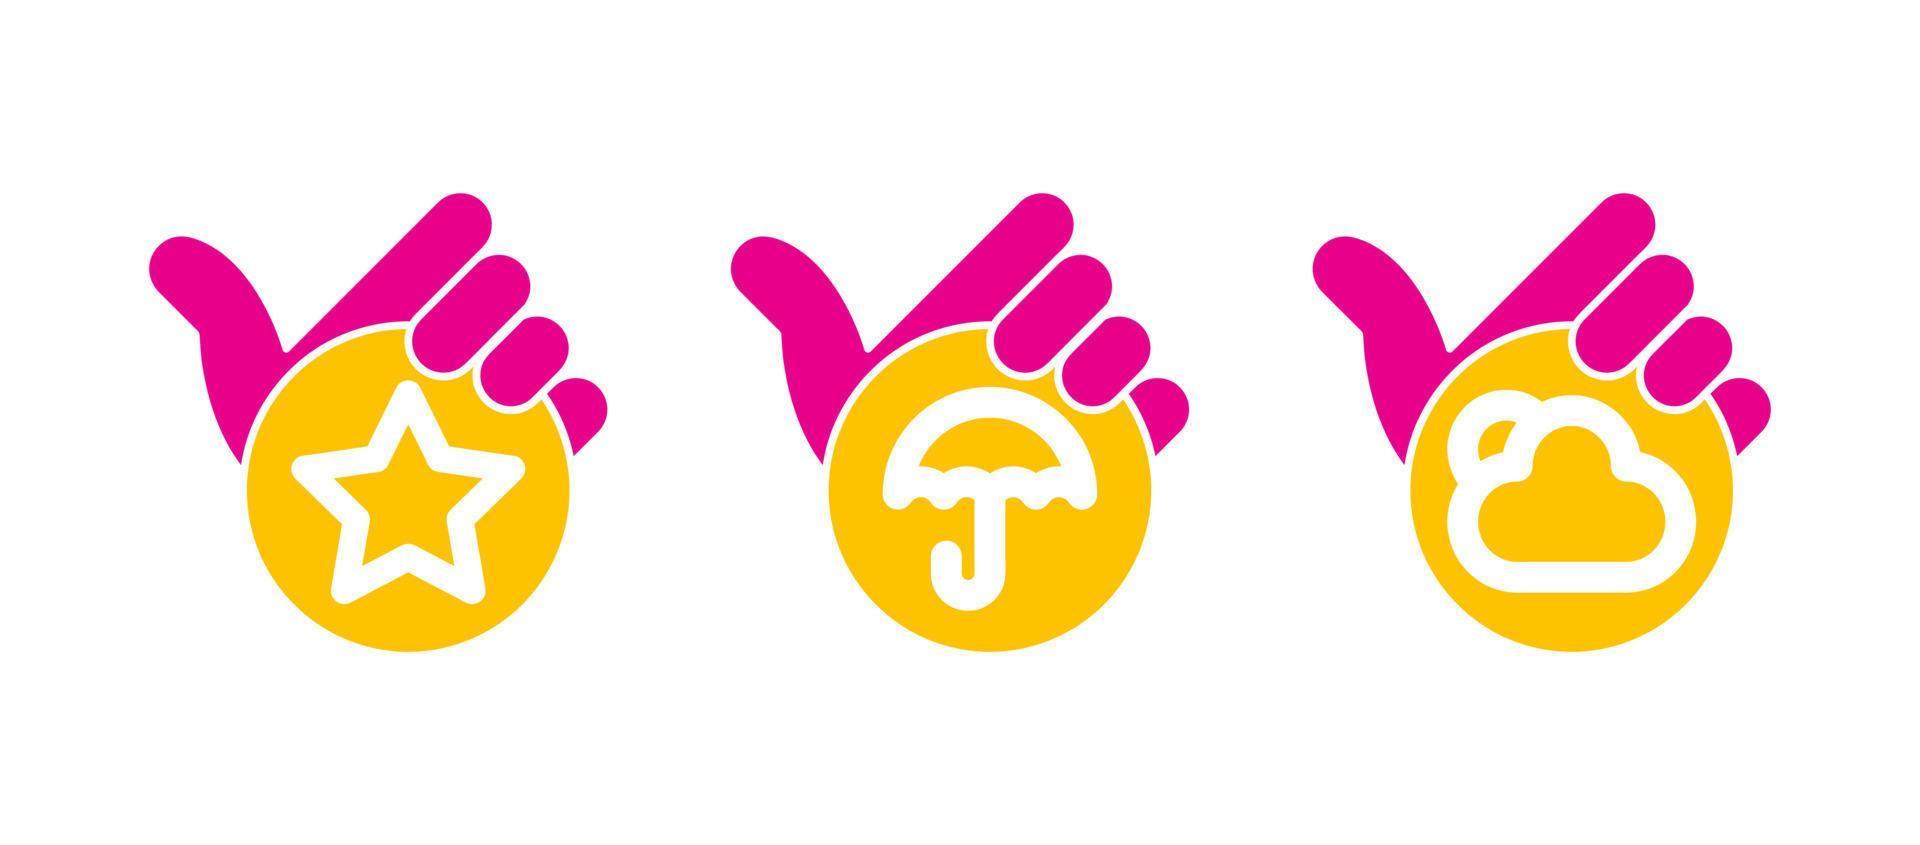 Geometric star, cloud and umbrella shape card in palm. Present geometric shape sign vector icon set. Colorful icon set. Logo-web, icon design element.